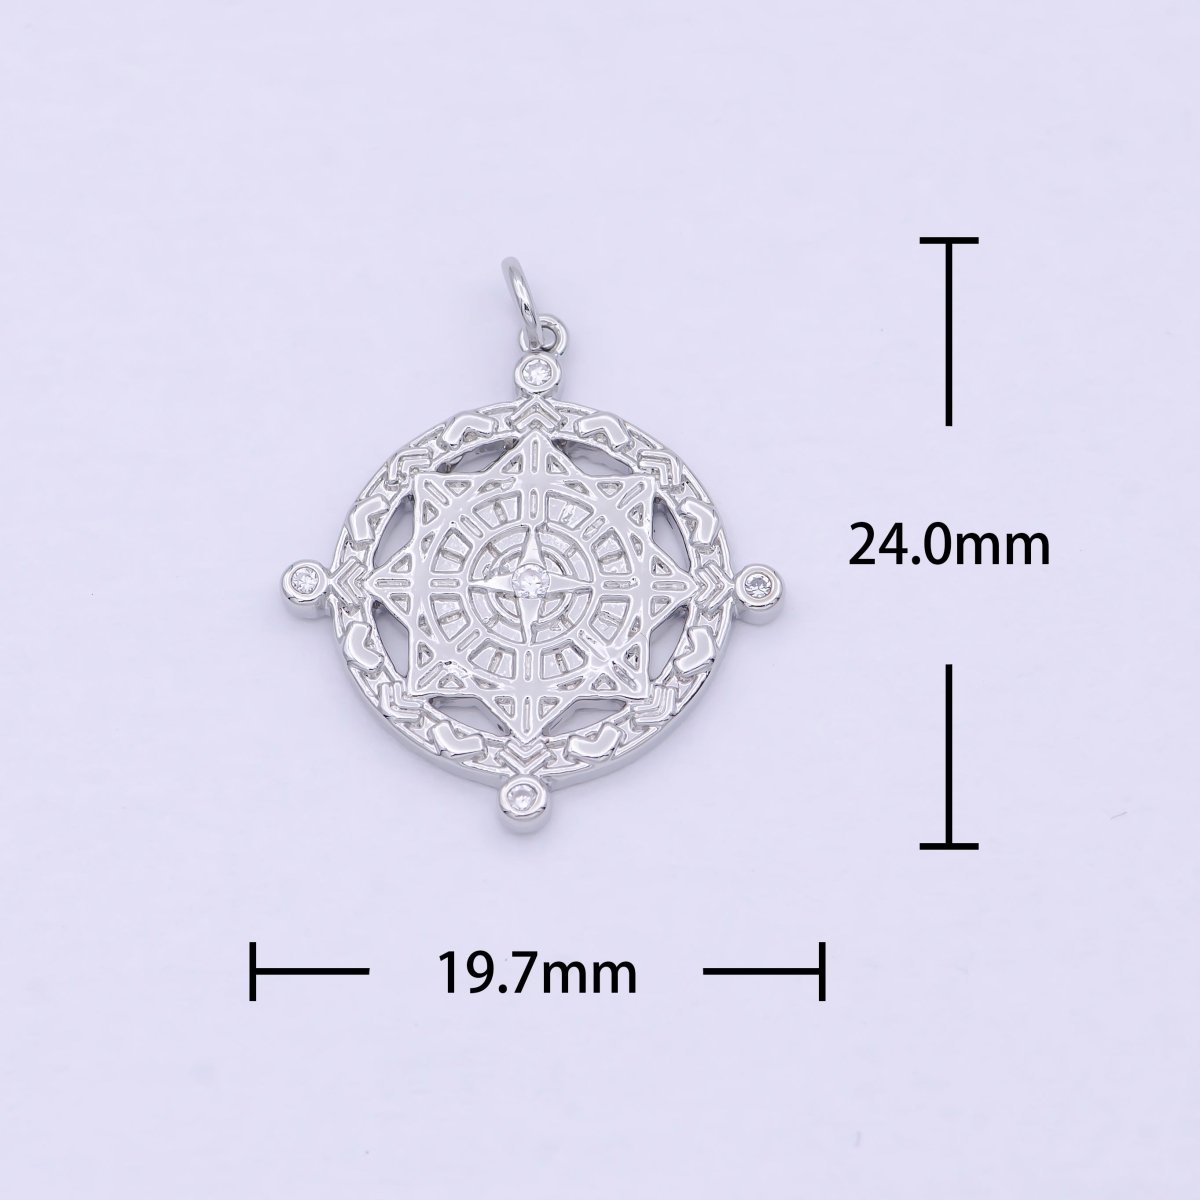 Silver Compass Pendant, cubic zirconia cz diamonds medallion pendant for Necklace Jewelry Making W-182 - DLUXCA